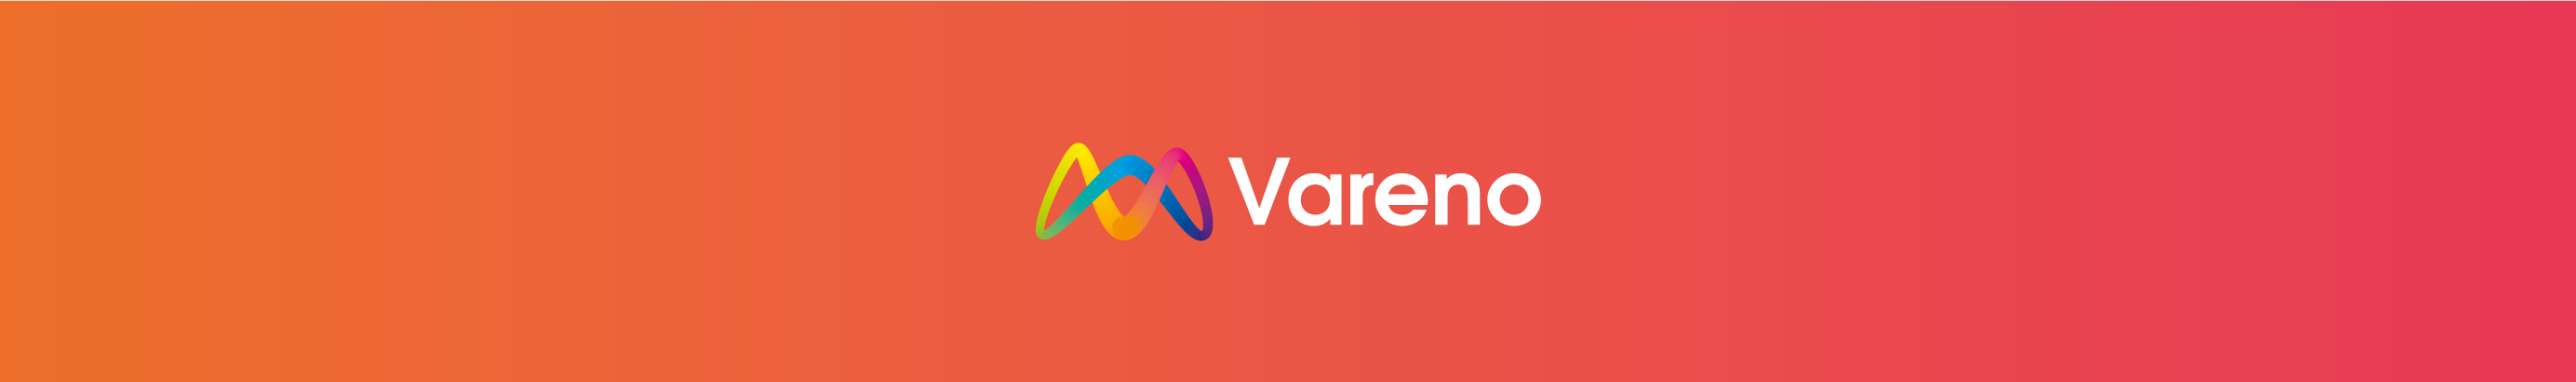 Vareno Thiết kế cao cấp's profile banner